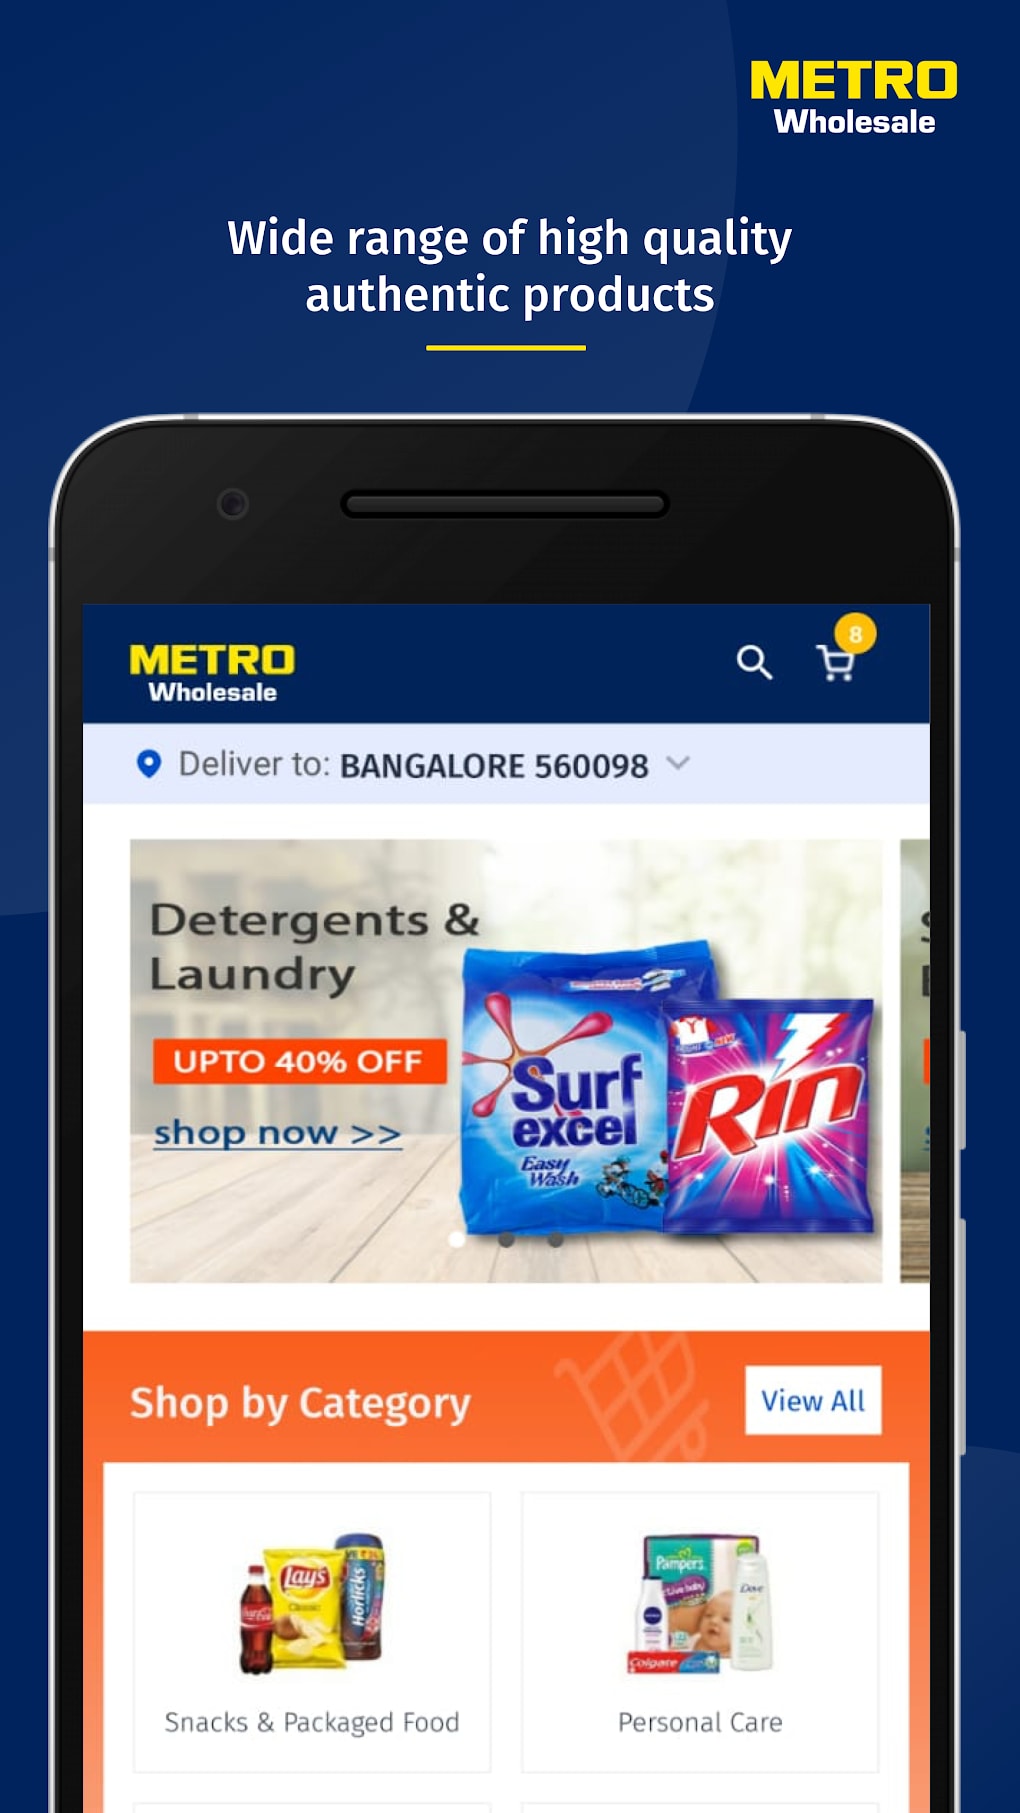 Metro Digital Card by METRO Cash & Carry India Pvt. Ltd.